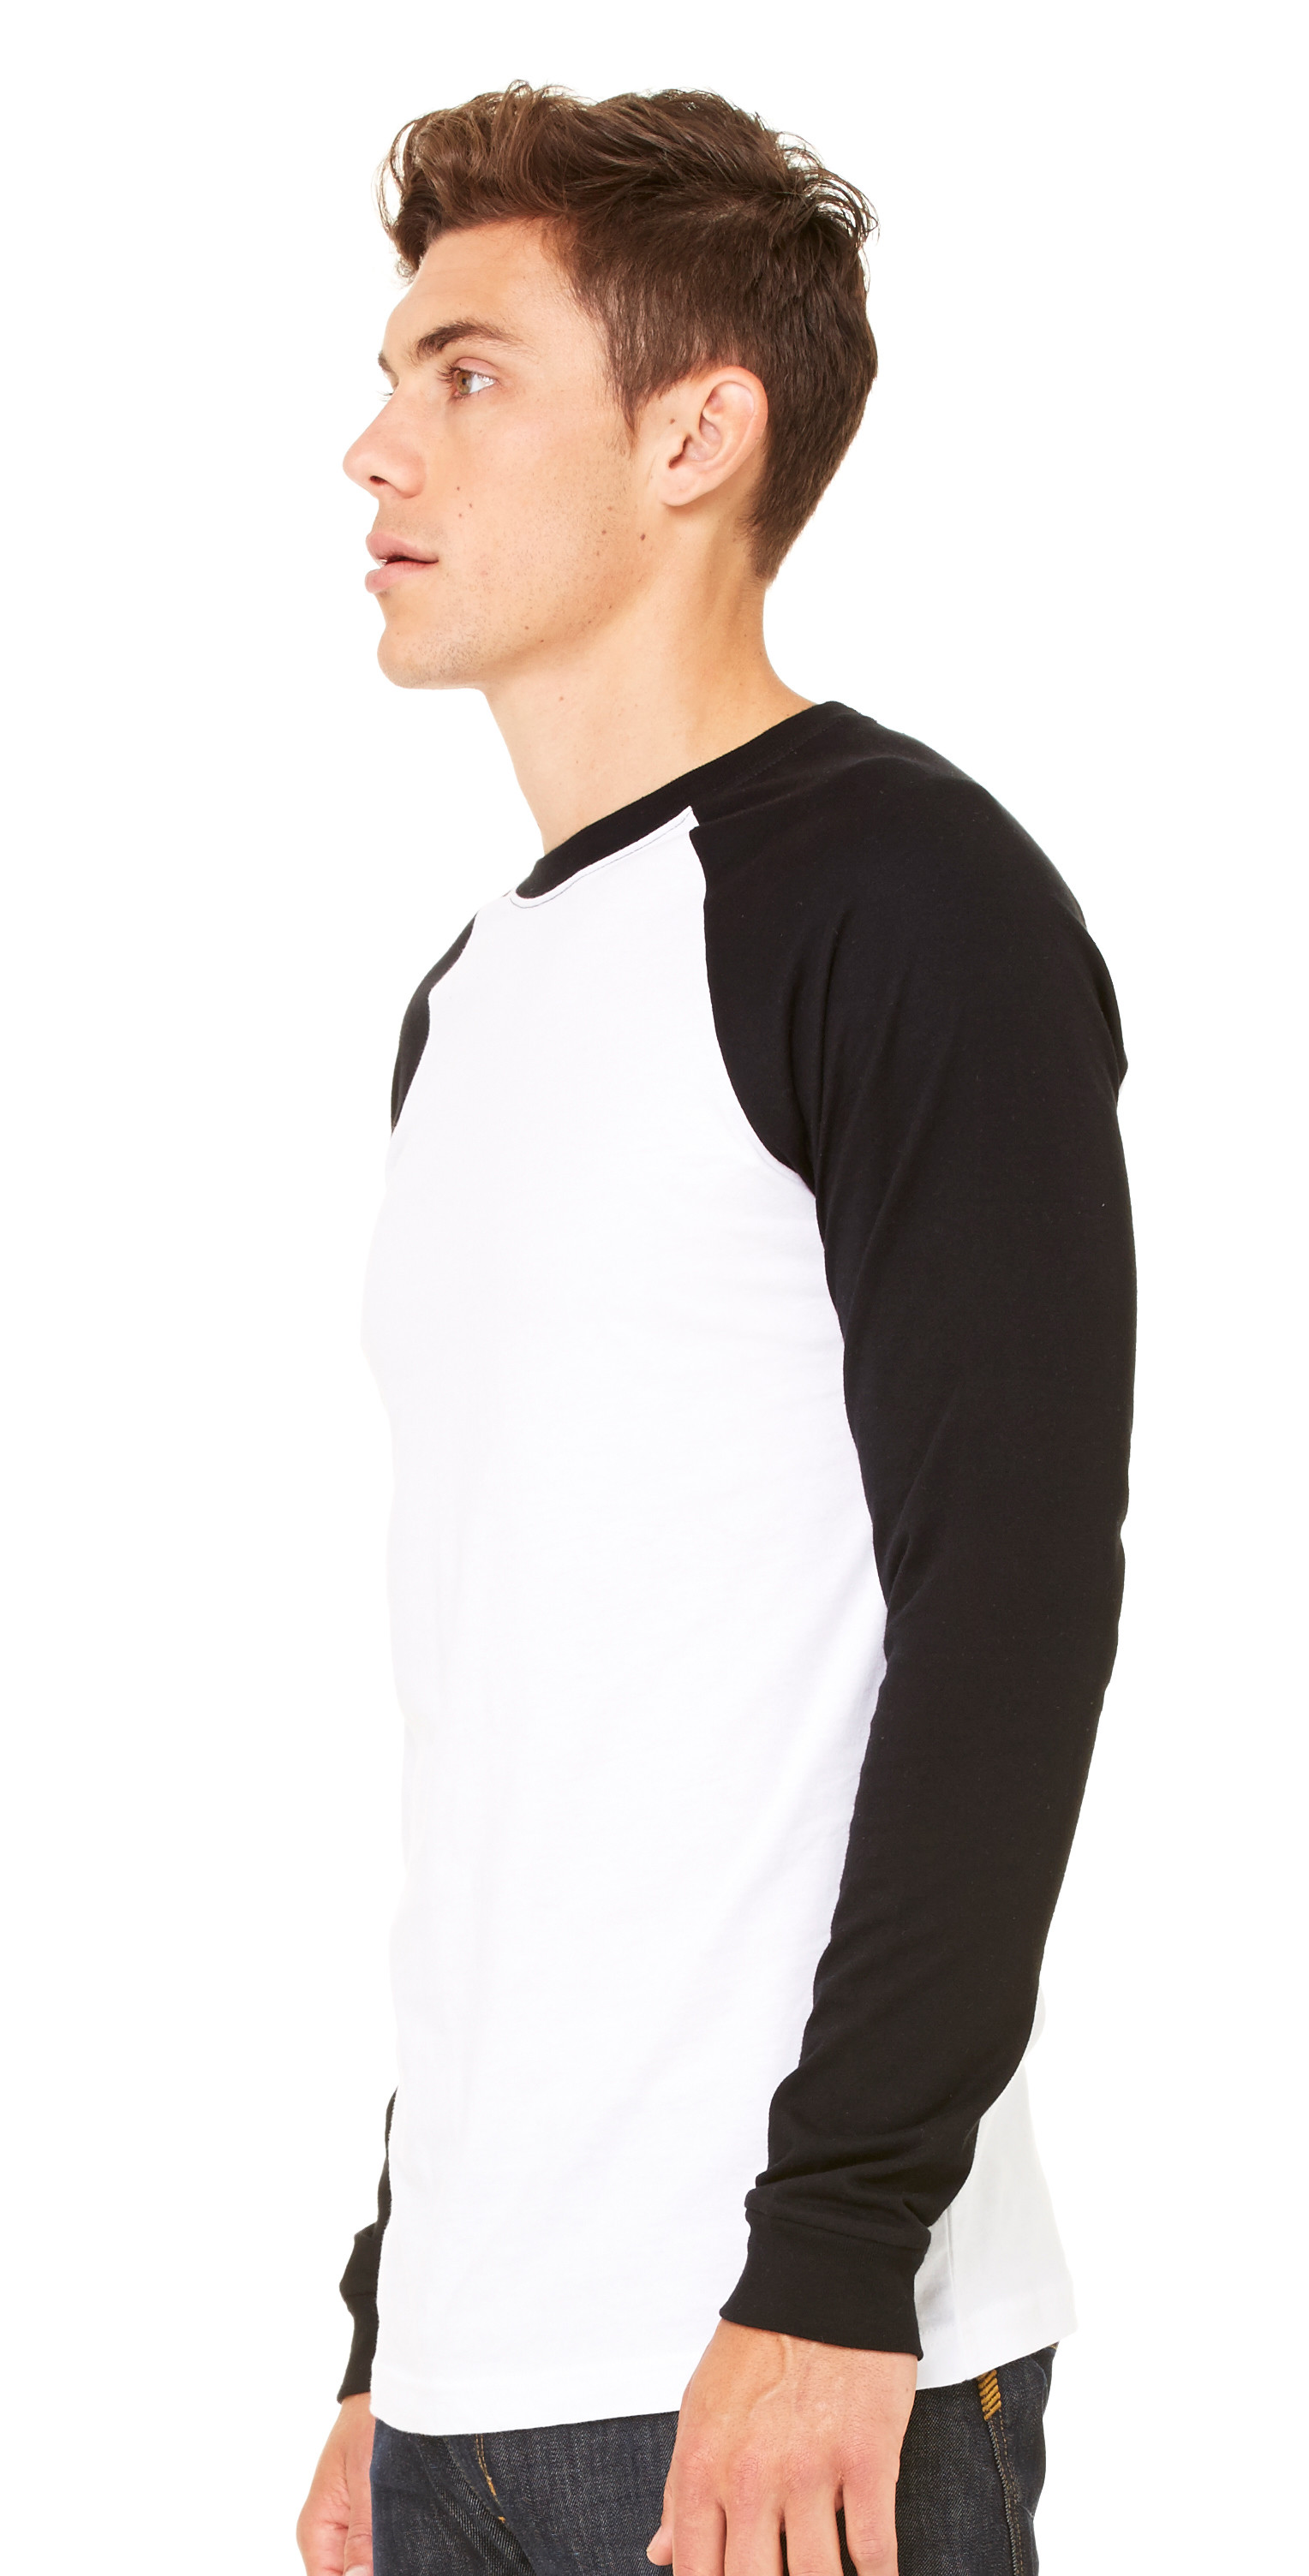 Personalized Jersey Long Sleeve Baseball Tee Shirt